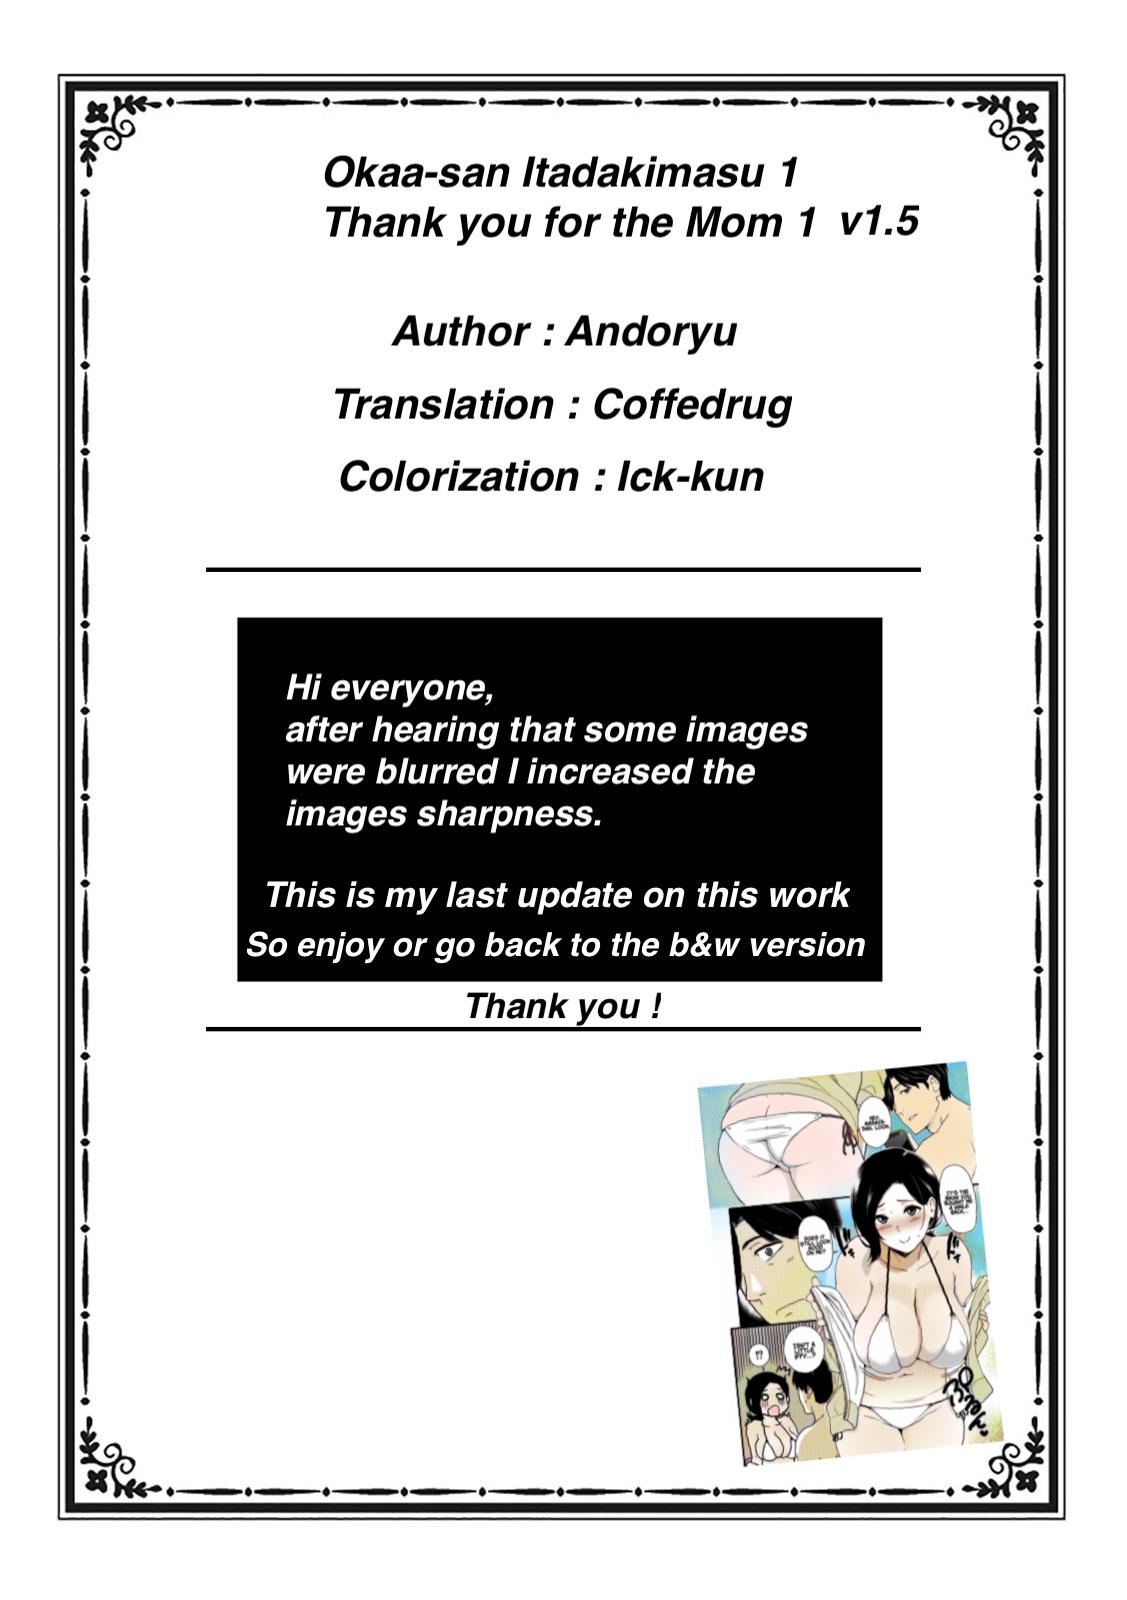 Abg Andoryu - Okaa-san Itadakimasu 1 - v1.5 [English] [ick-kun] - Original Hardcorend - Page 1